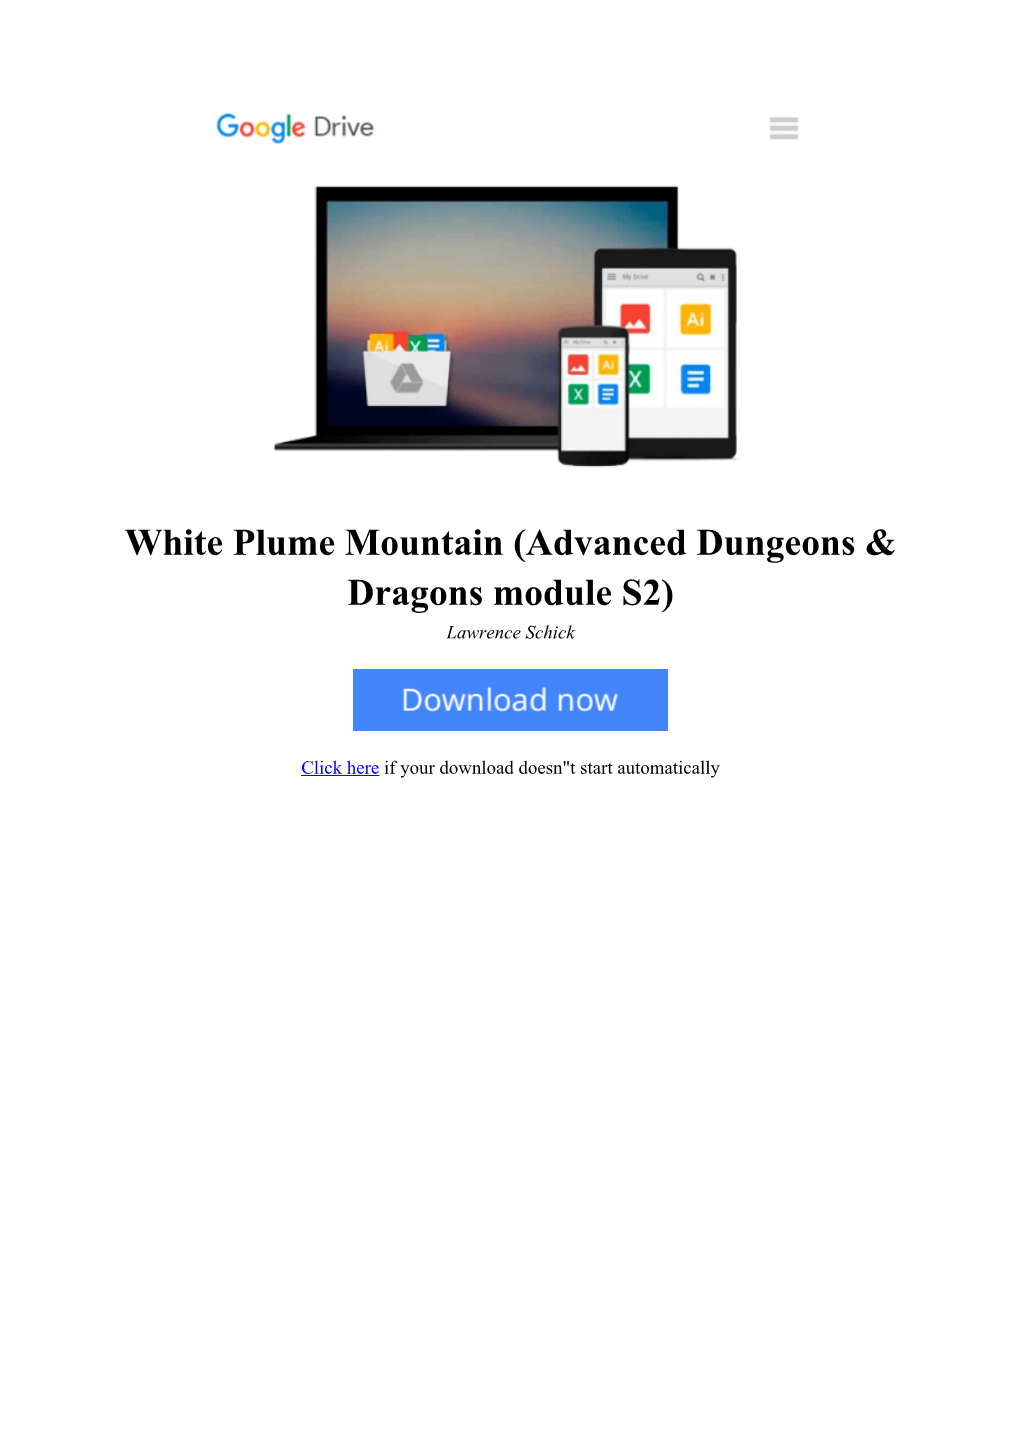 White Plume Mountain (Advanced Dungeons & Dragons Module